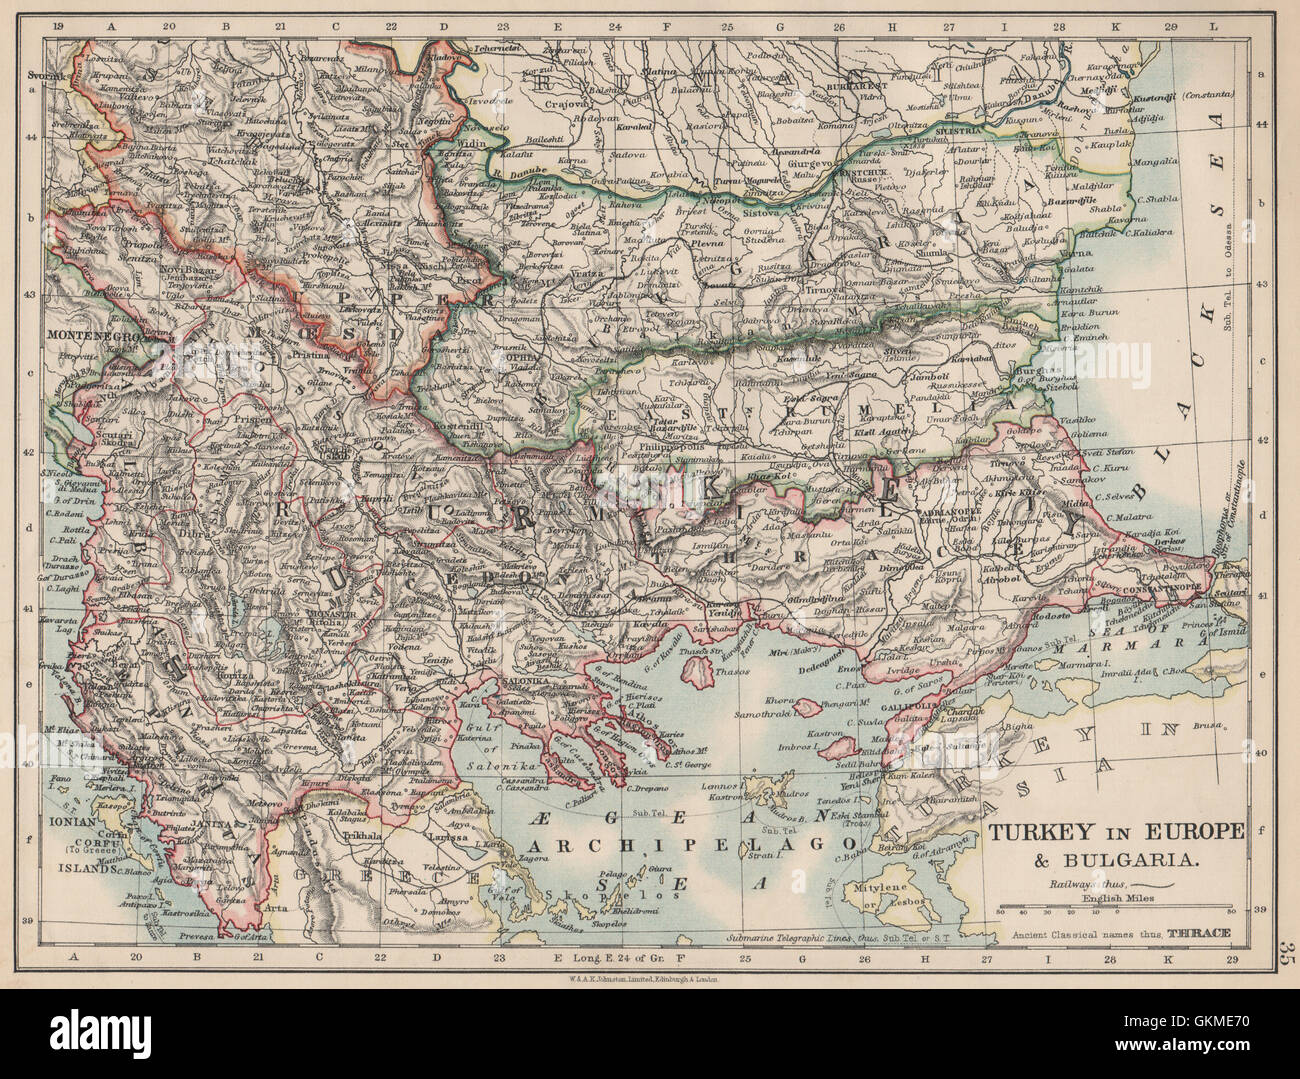 turkey-in-europe-bulgaria-rumili-east-rumelia-balkans-johnston-1903-GKME70.jpg